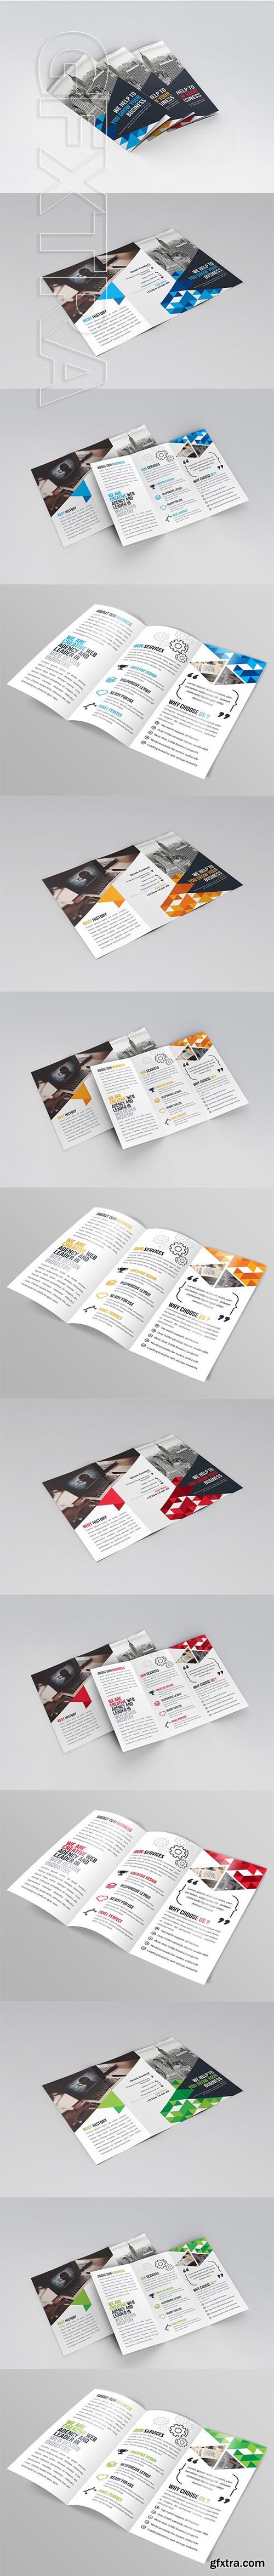 CreativeMarket - Business Tri-Fold Brochure 2080748